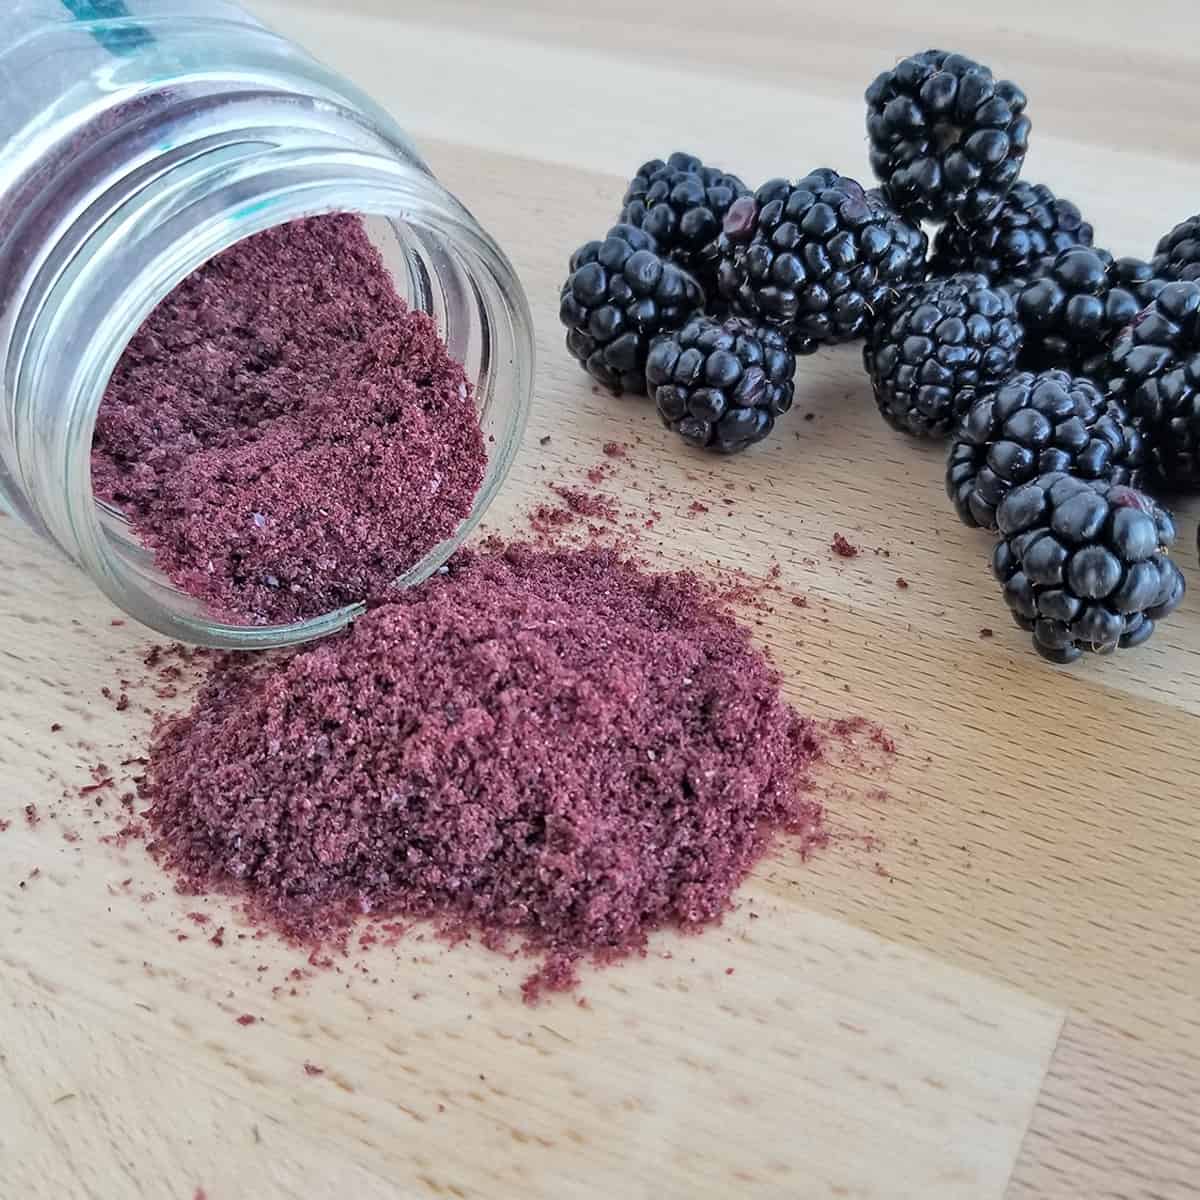 How to Dehydrate Blackberries & Make Blackberry Powder